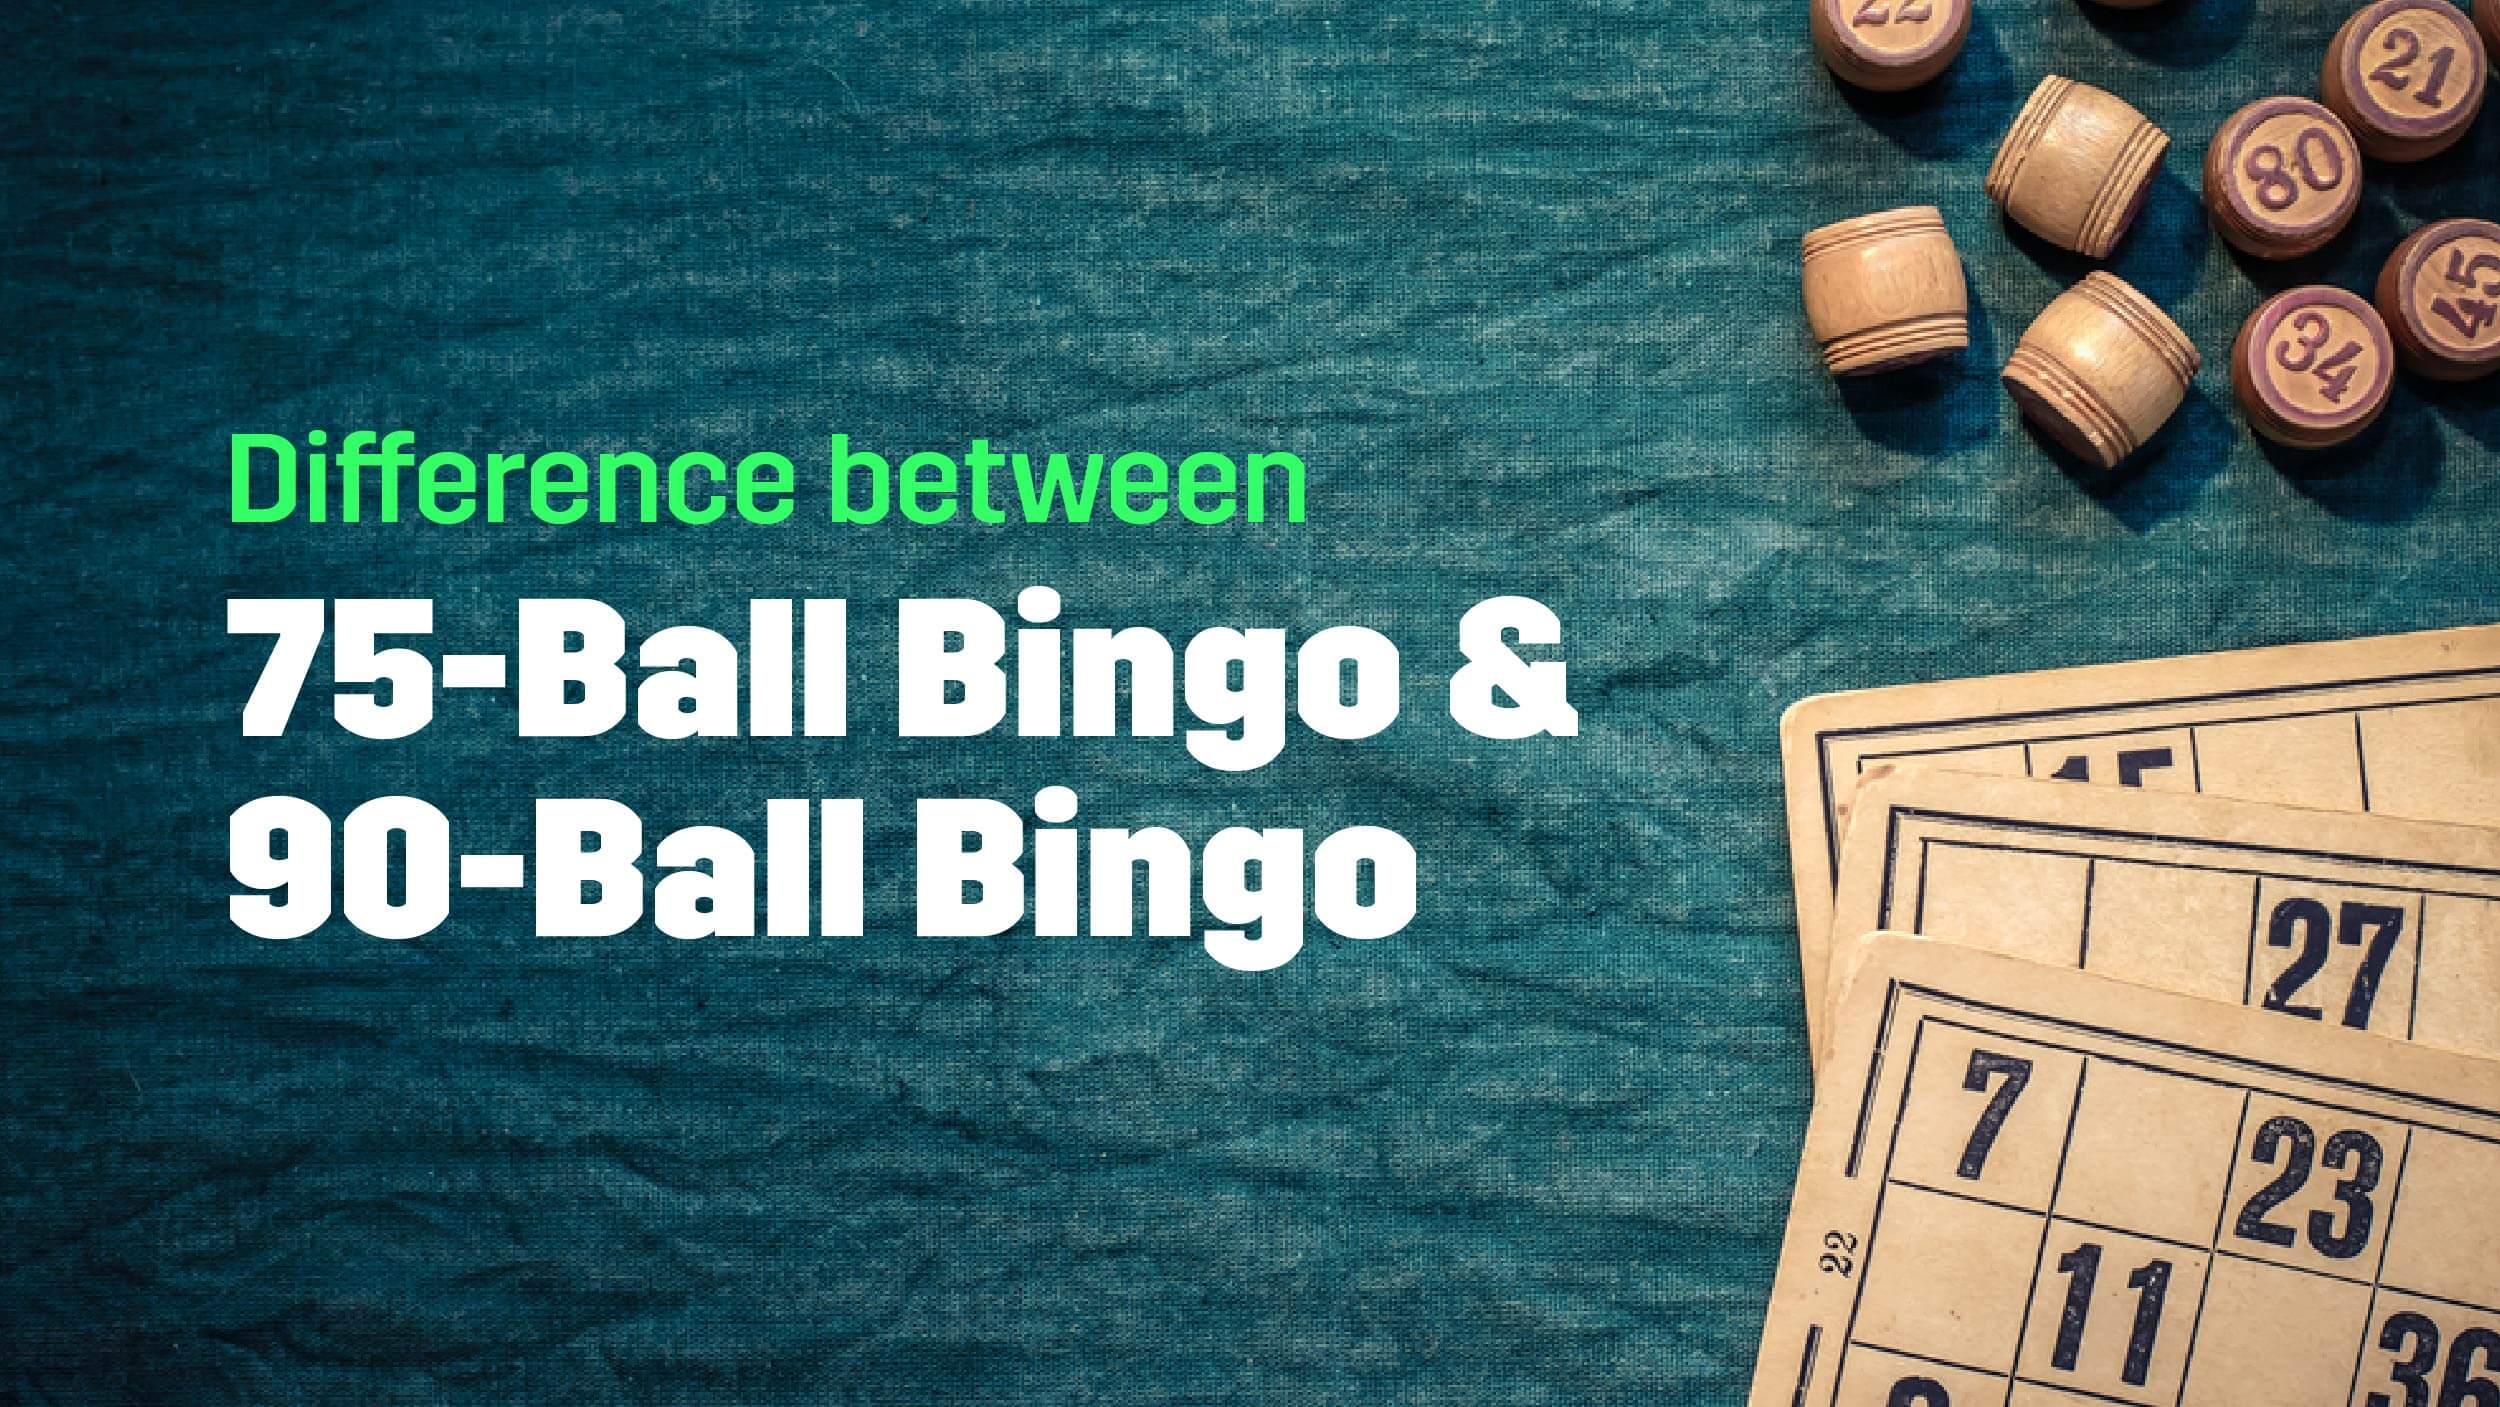 75 ball bingo vs 90 ball bingo